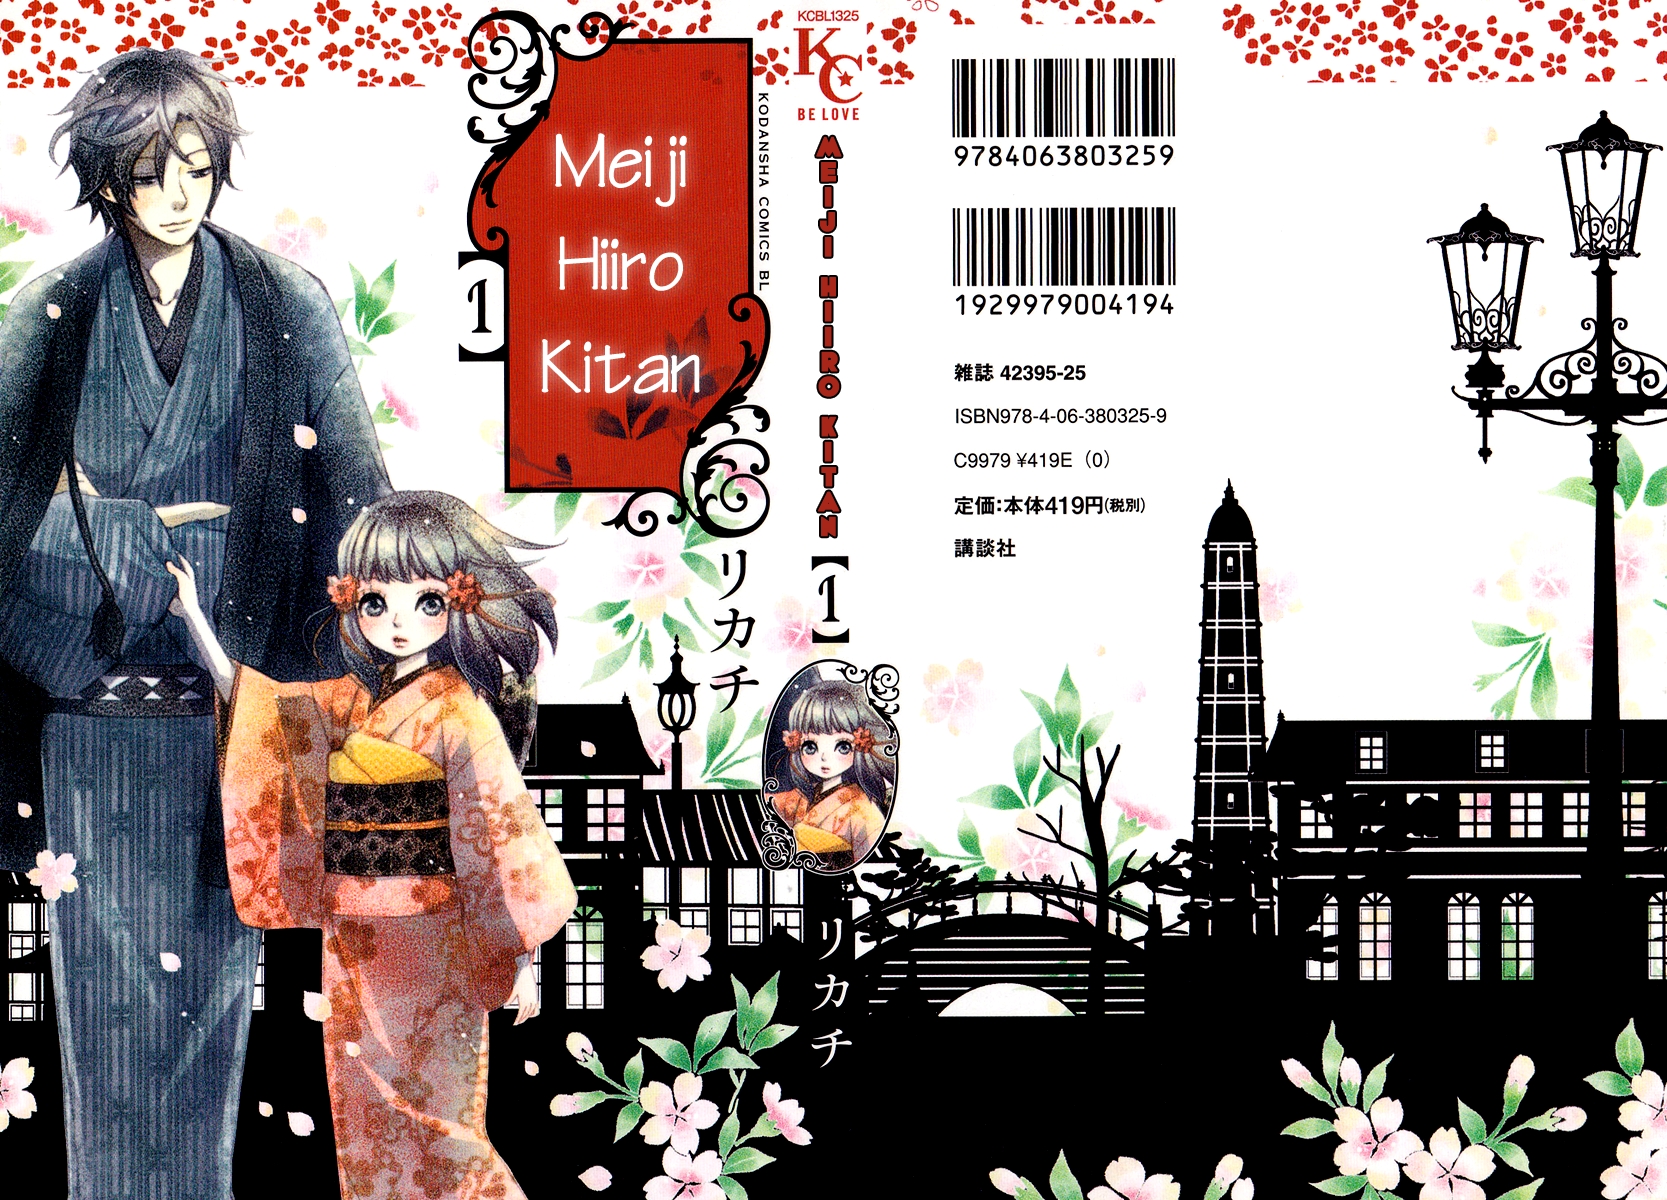 Meiji Hiiro Kitan Backgrounds on Wallpapers Vista